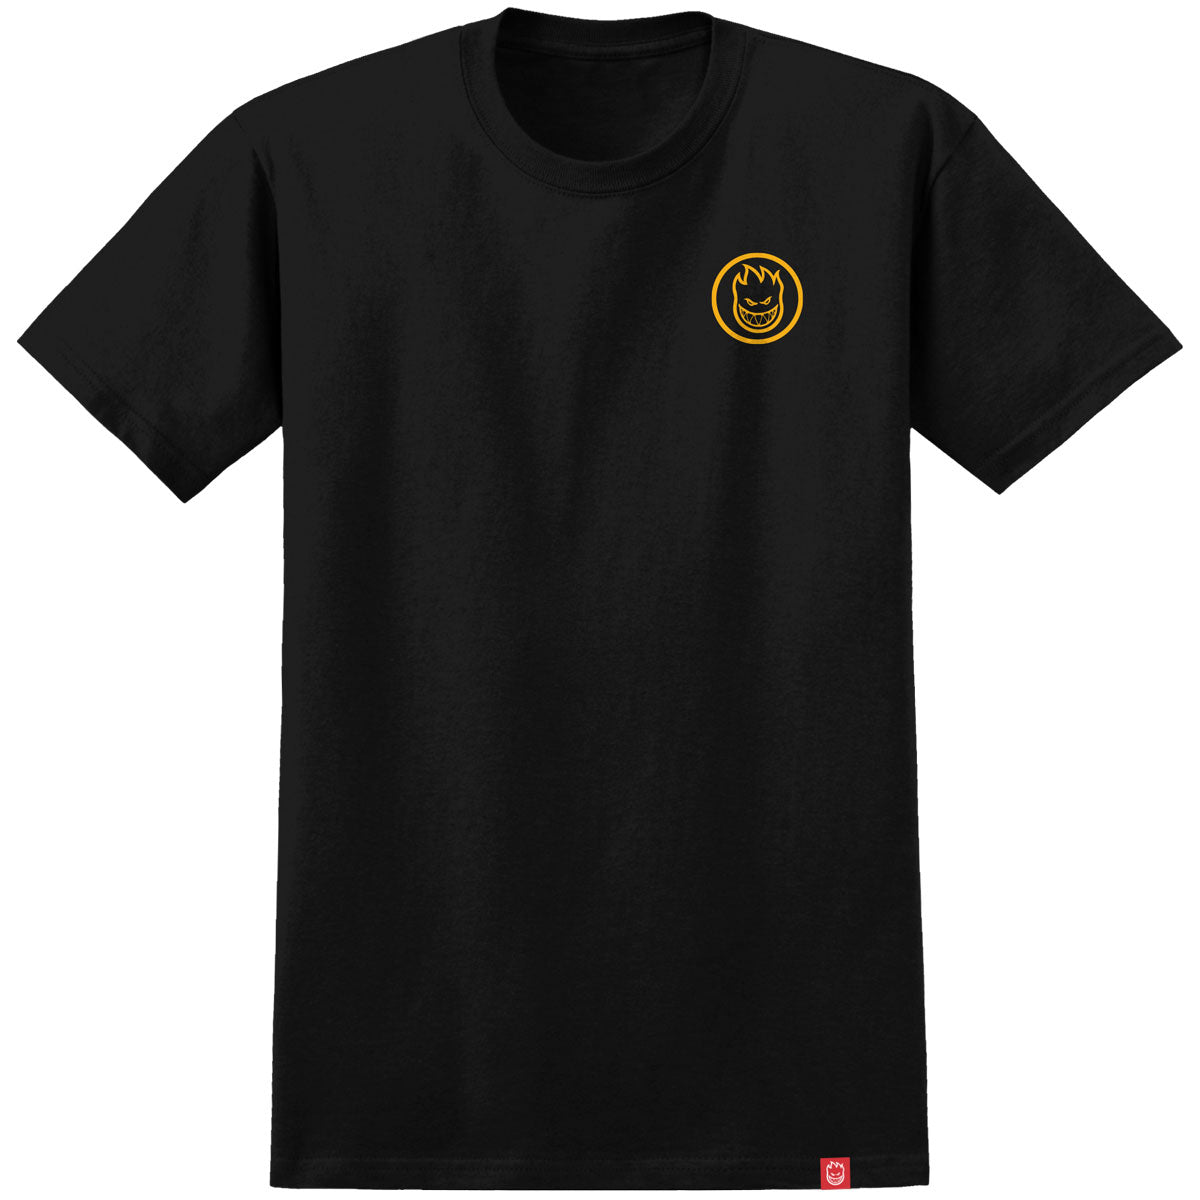 Spitfire Classic Swirl T-Shirt - Black/Gold image 2